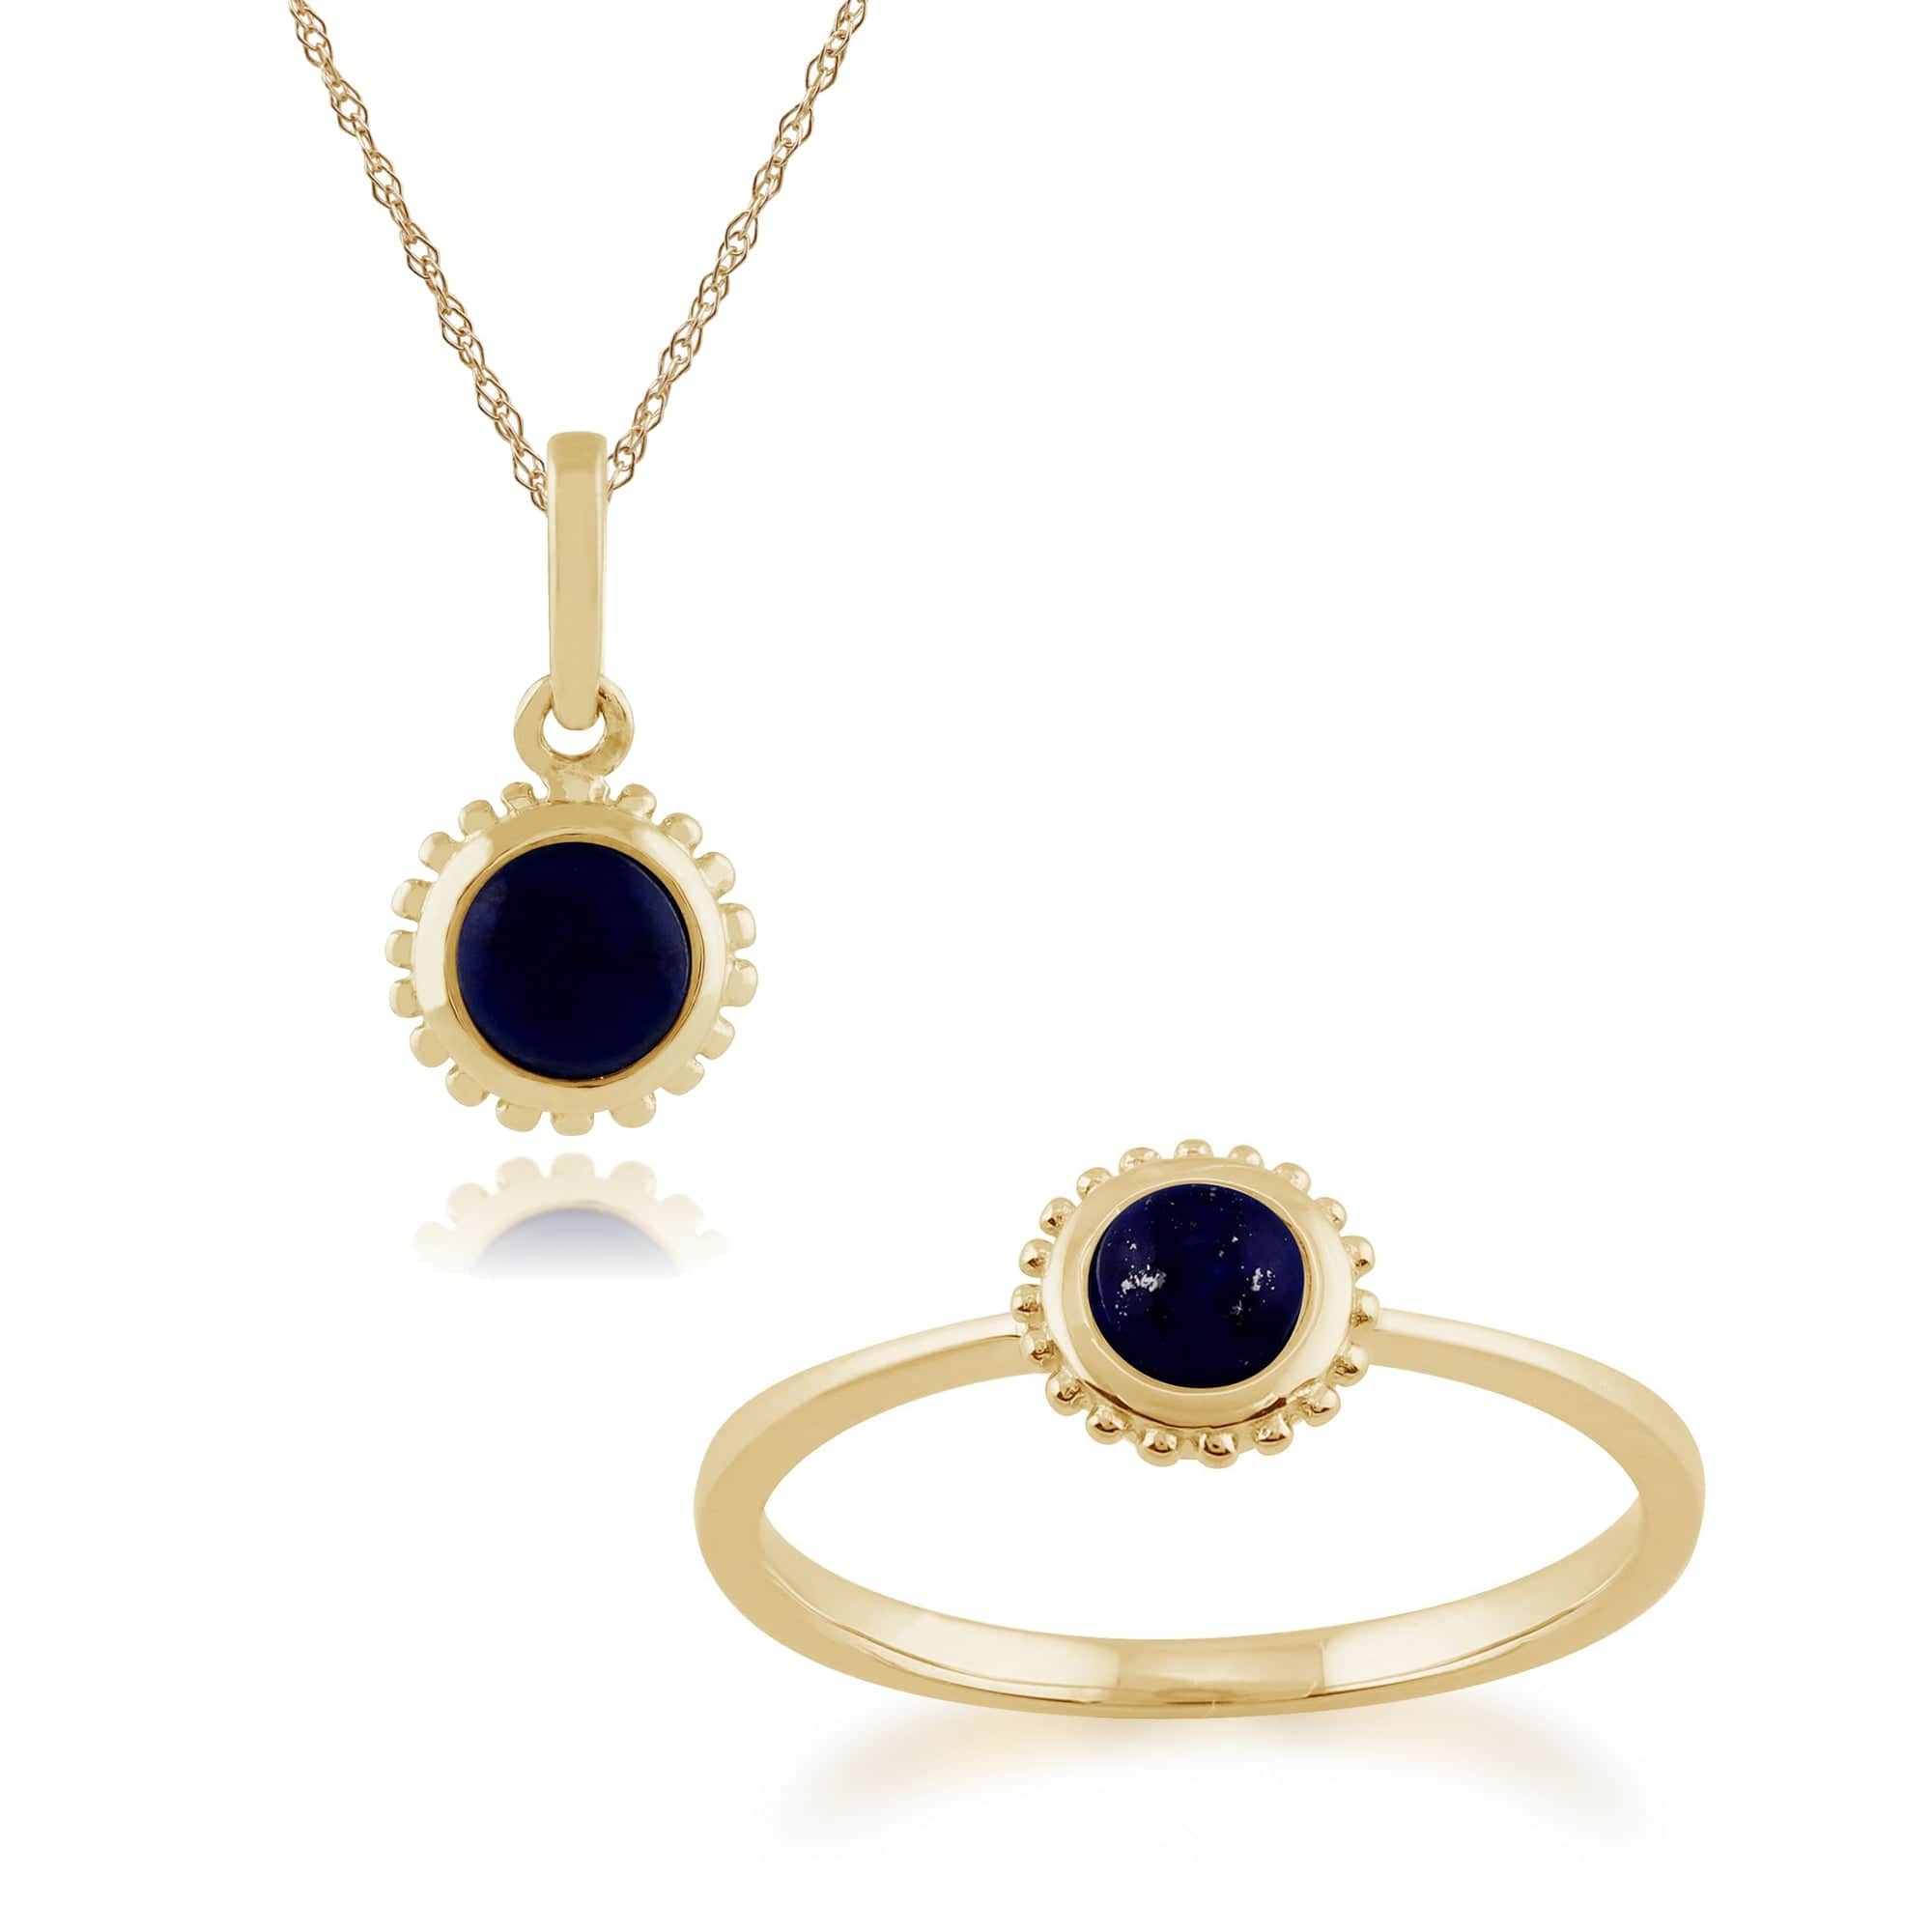 135P1549029-135R1270029 Classic Round Lapis Lazuli Single Stone Pendant & Solitaire Ring Set in 9ct Yellow Gold 1